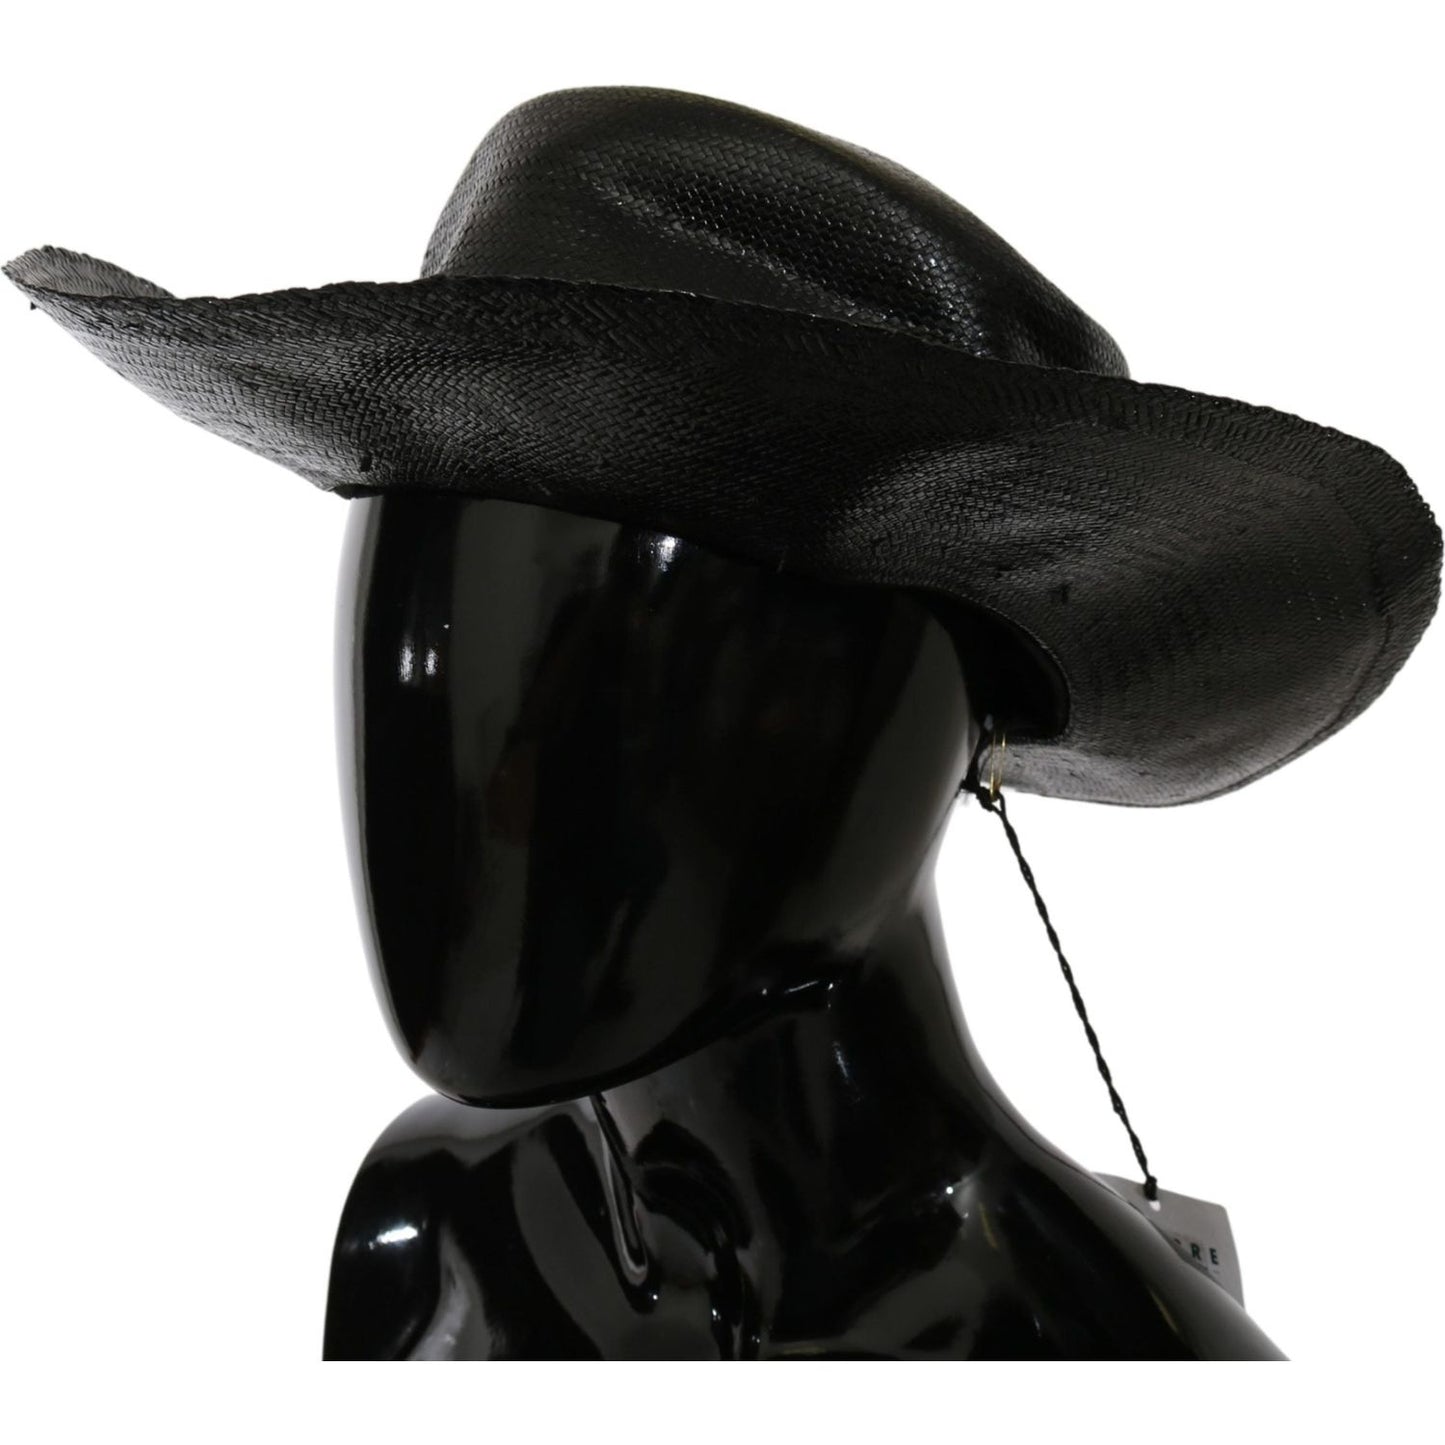 Costume National Chic Black Floppy Hat - Timeless Elegance Hat black-wide-brim-cowboy-solid-hat IMG_0920-scaled-9812c8e2-a18.jpg